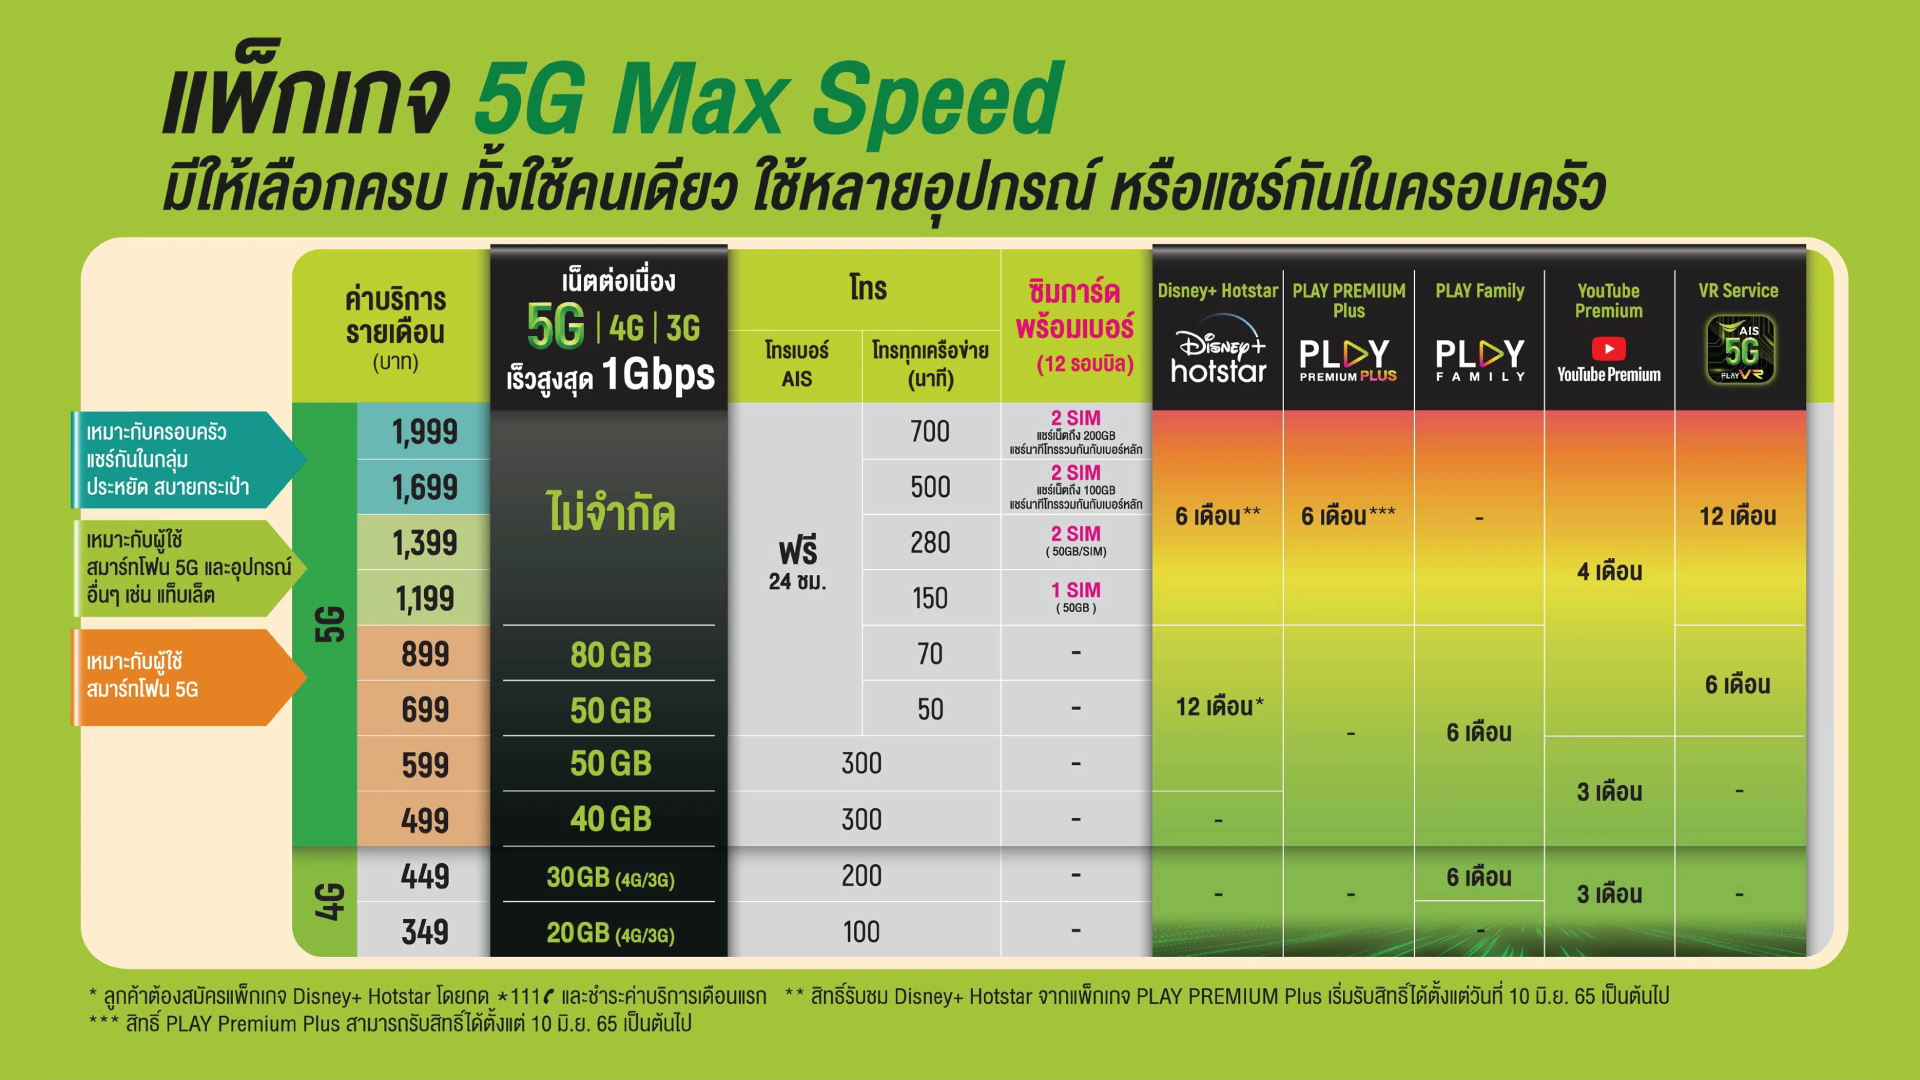 New 5G Max Speed